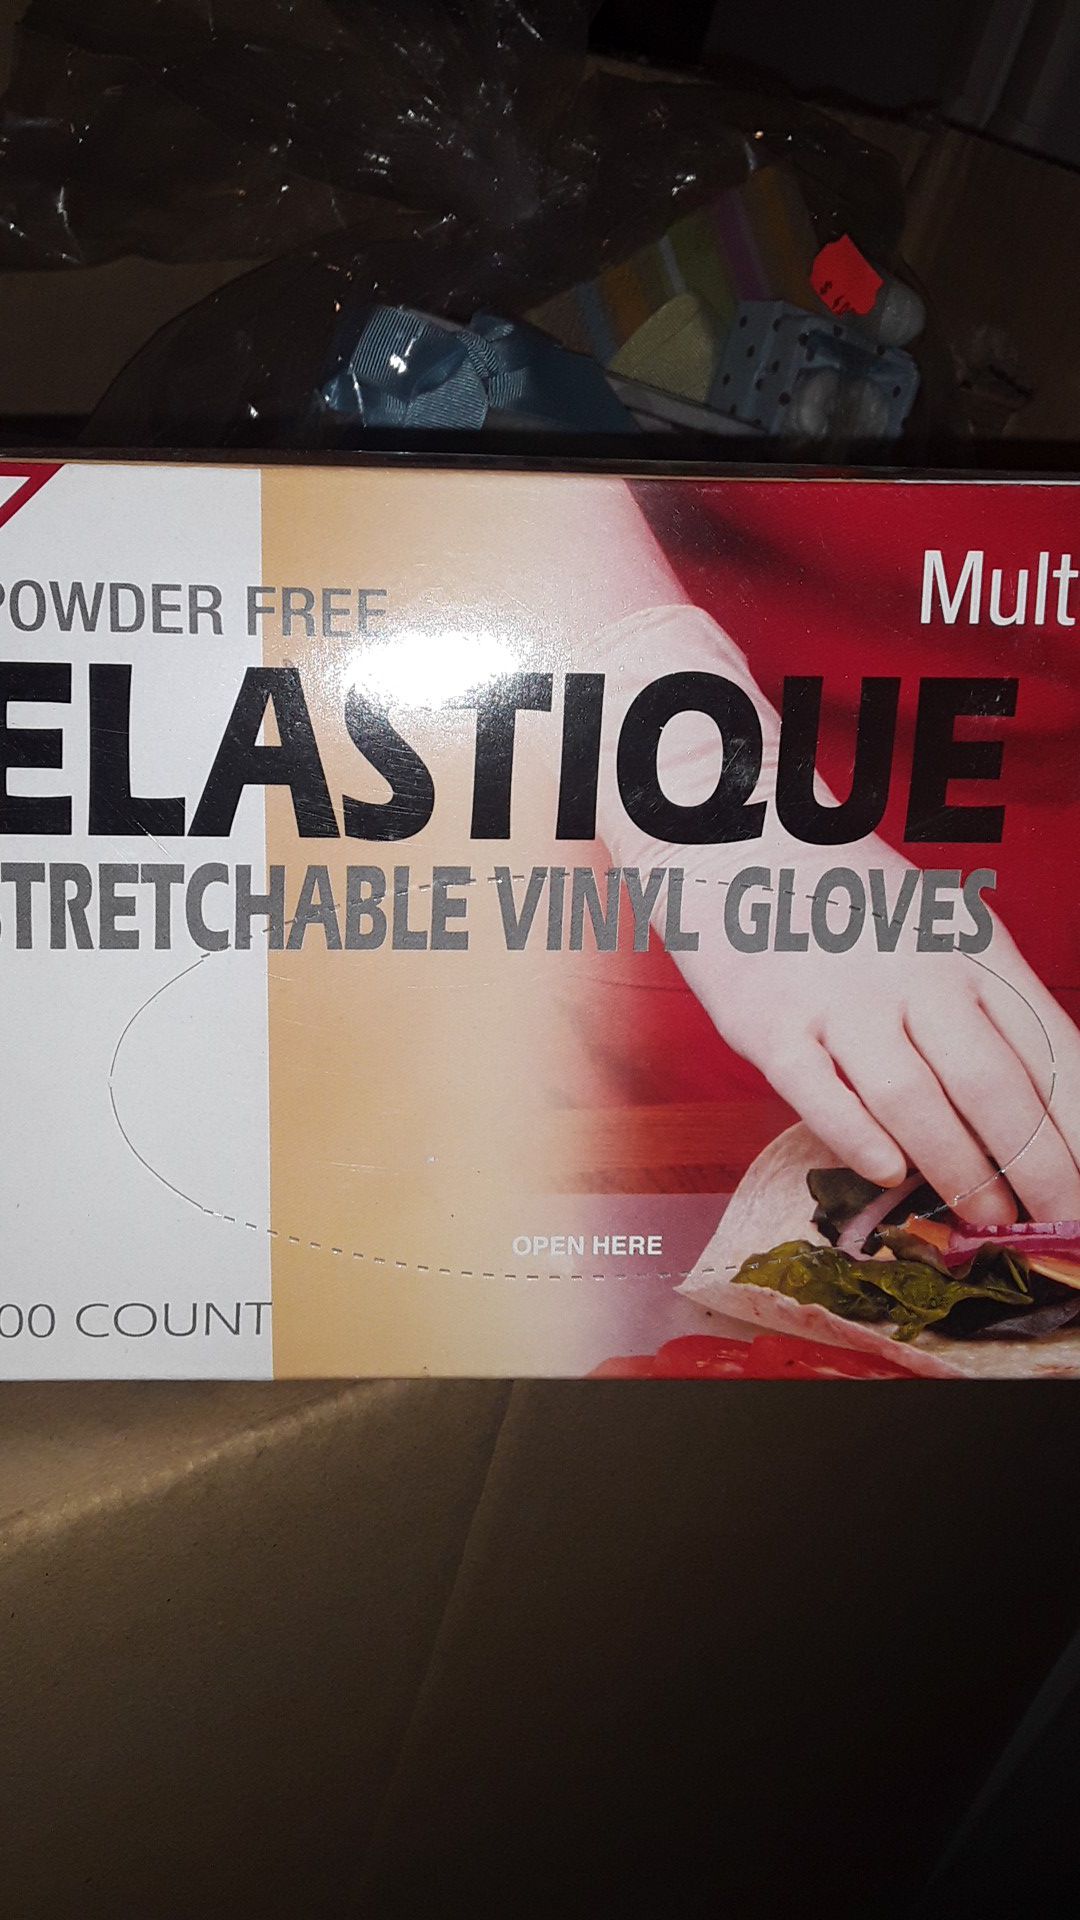 Elastique Strechable Vinyl Gloves